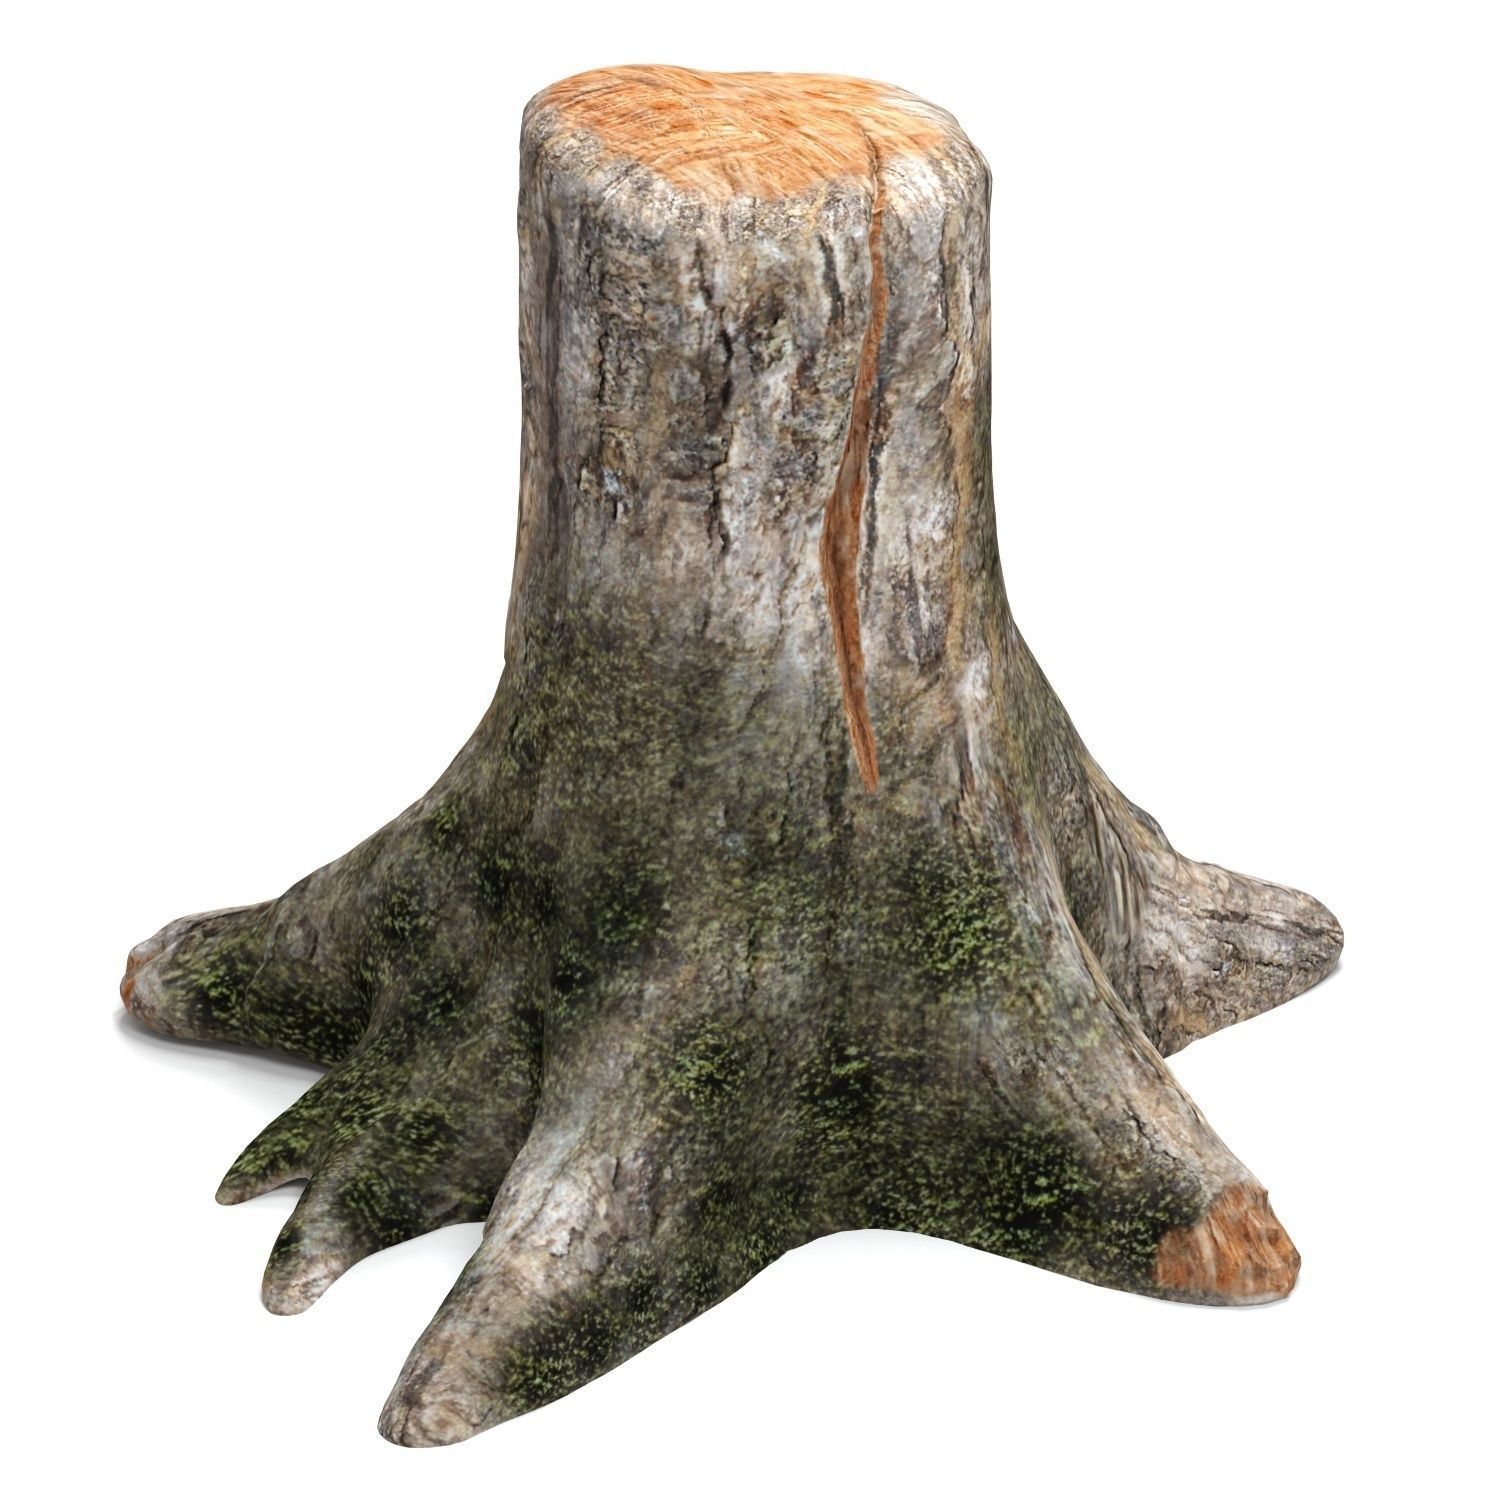 Old tree stump 3D timber | CGTrader